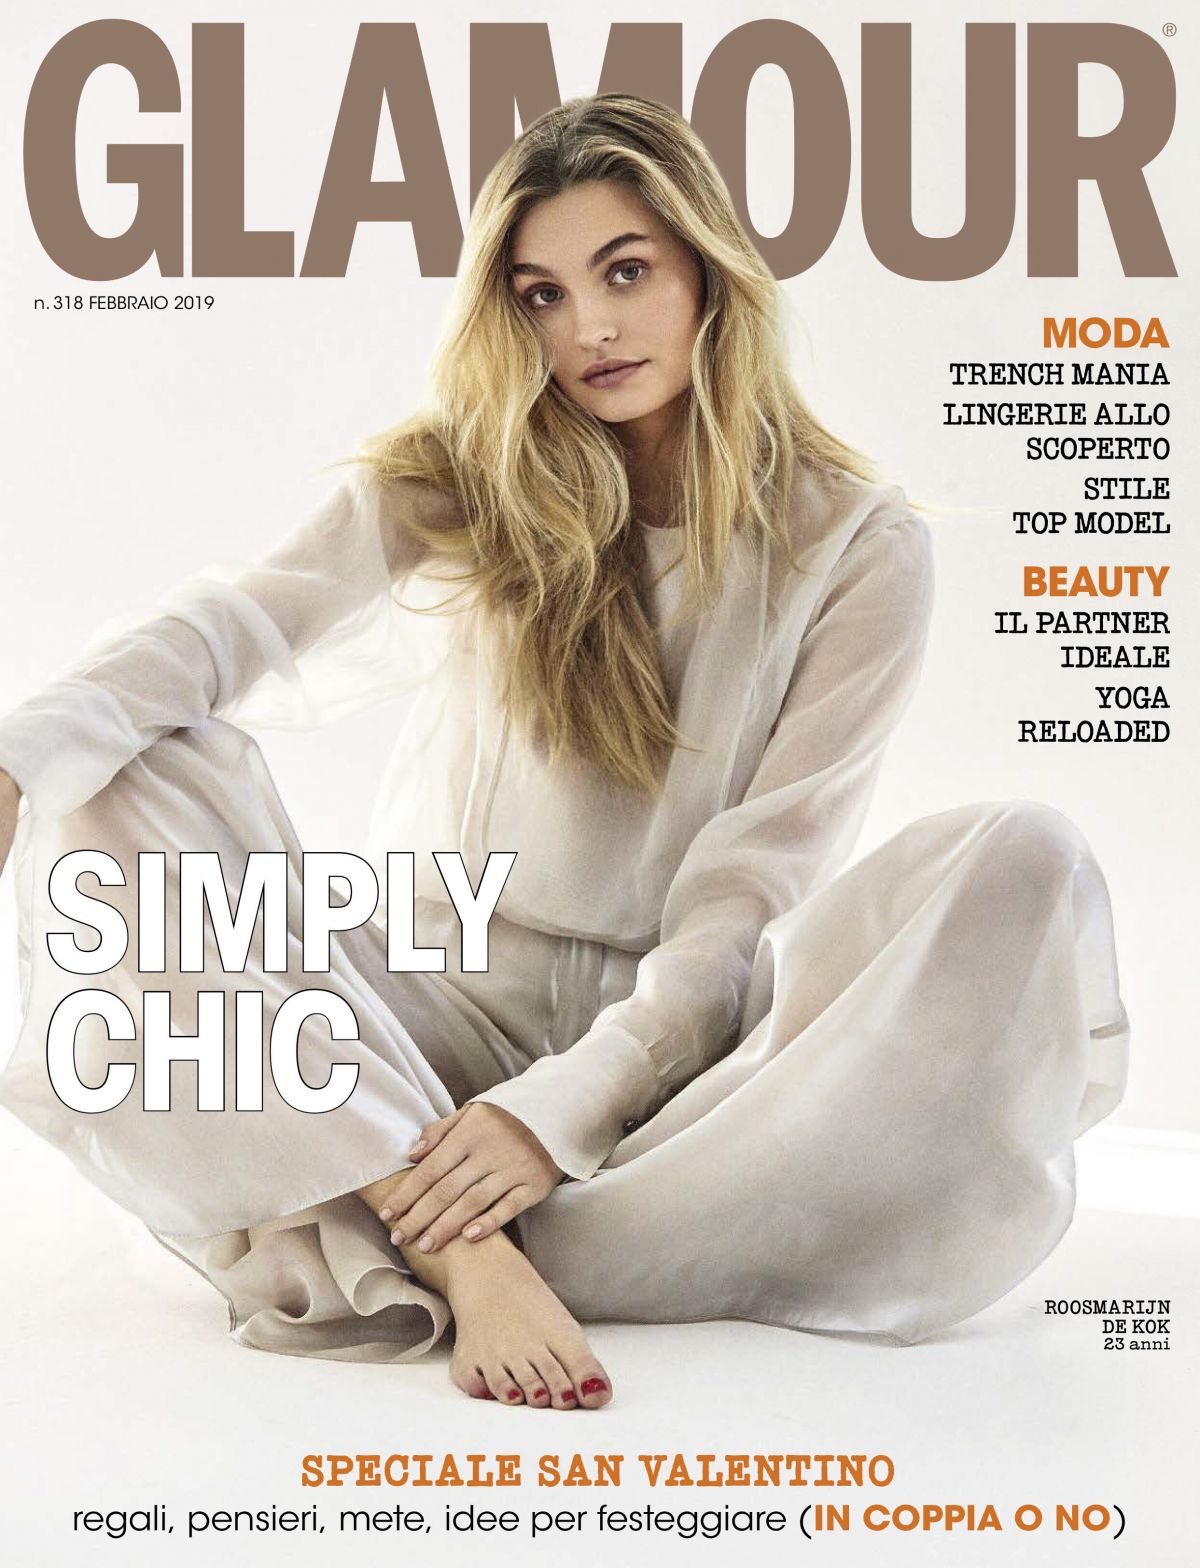 roosmarijn-de-kok-in-glamour-magazine-italy-february-2019-9.jpg